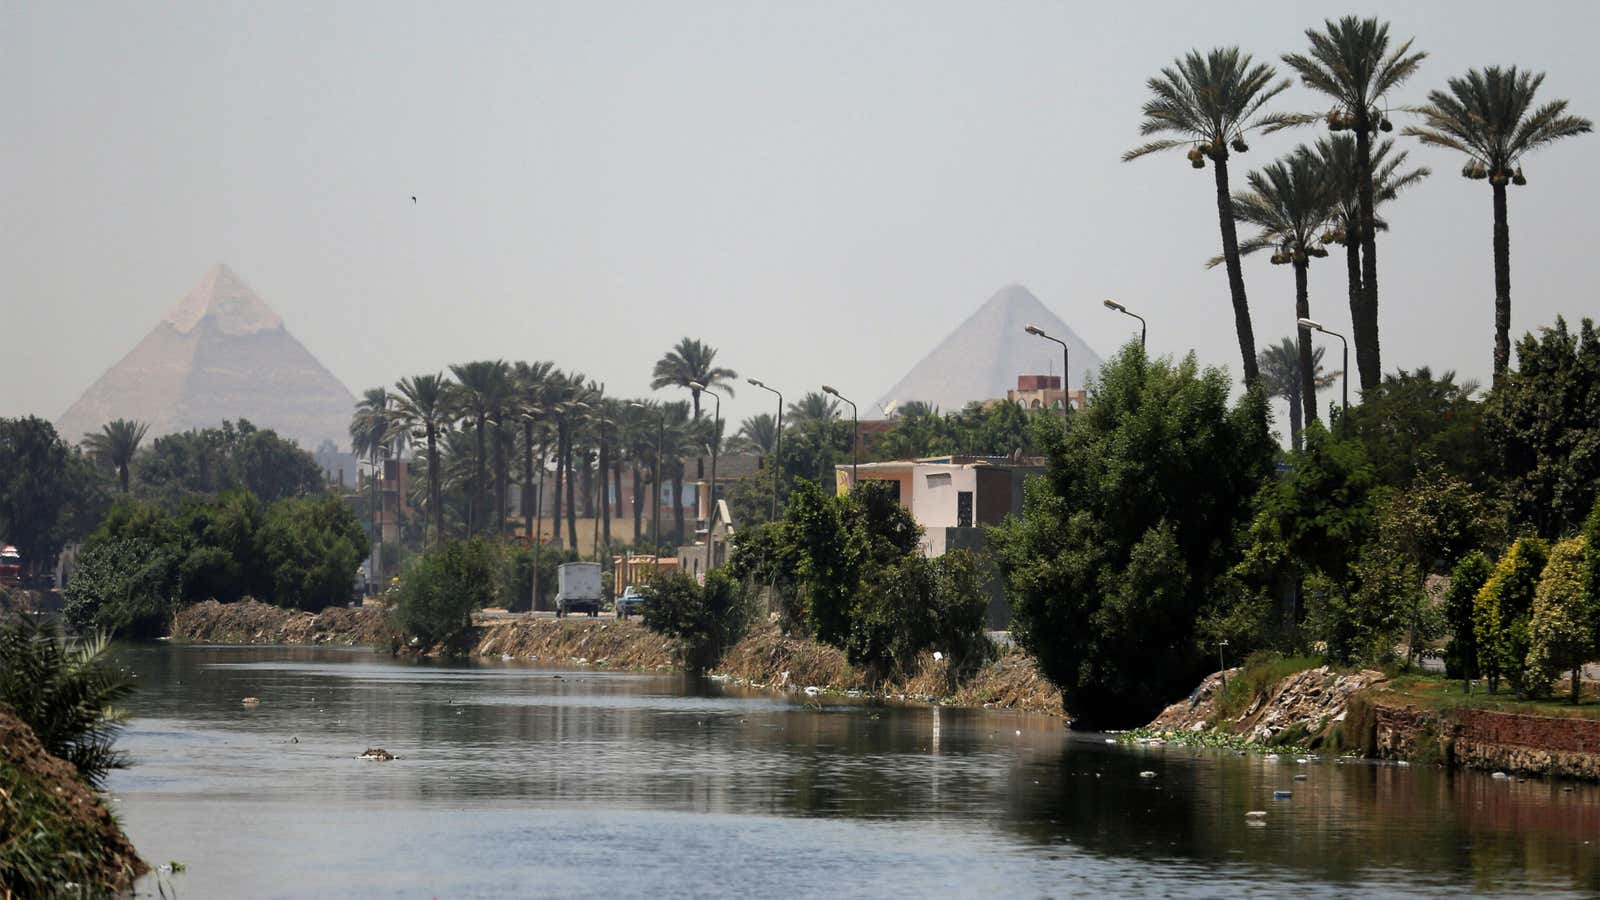 As the Nile flows, so does Egypt.